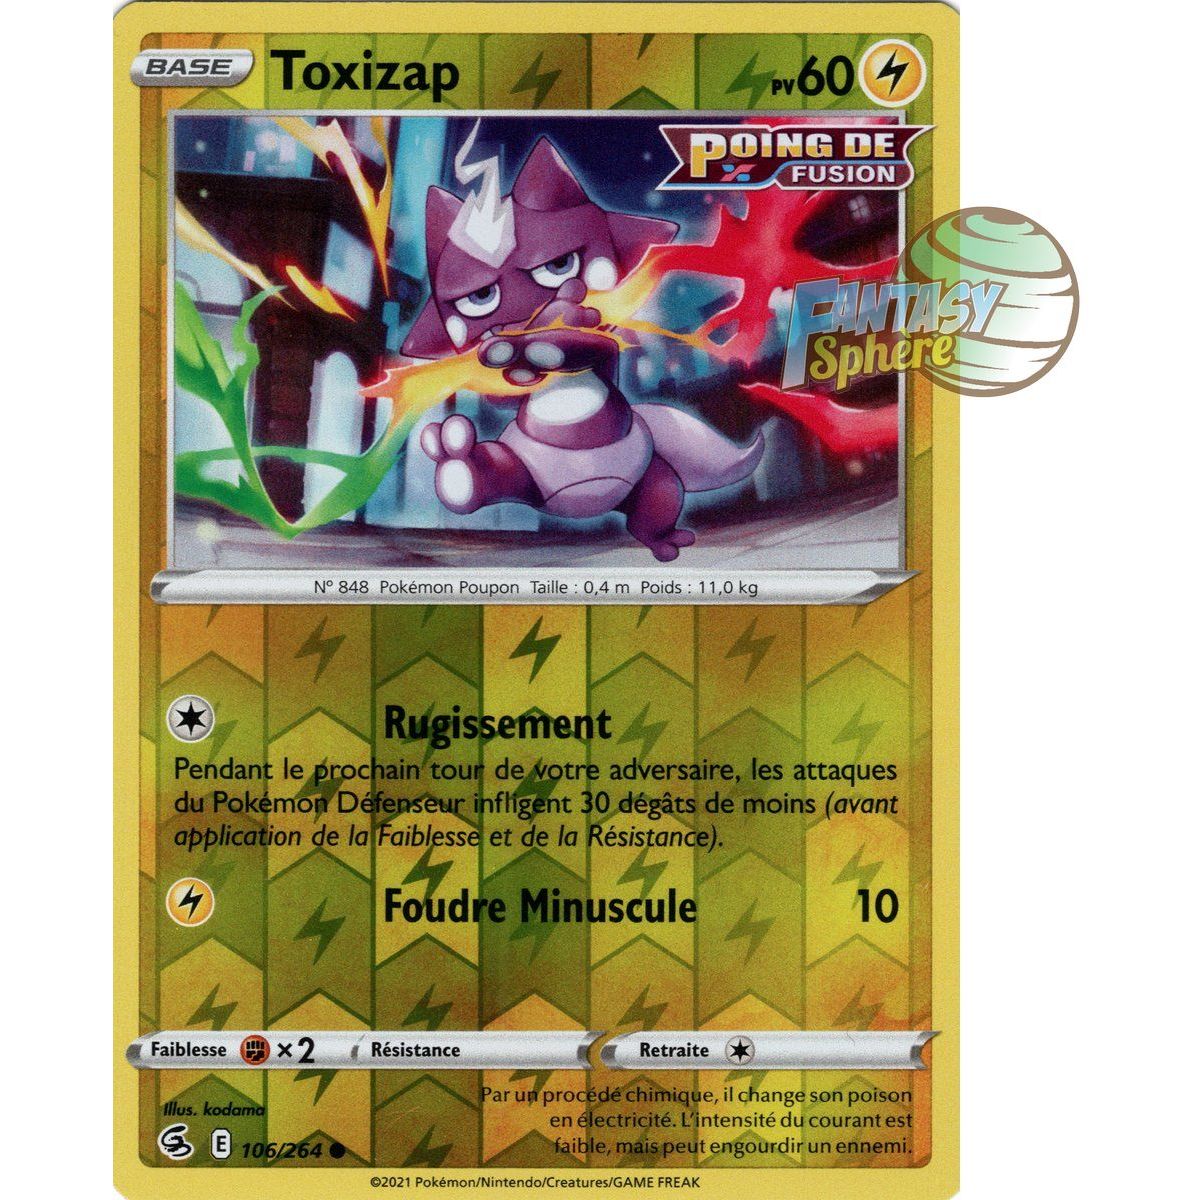 Toxizap - Reverse 106/264 - Sword and Shield 8 Fusion Fist